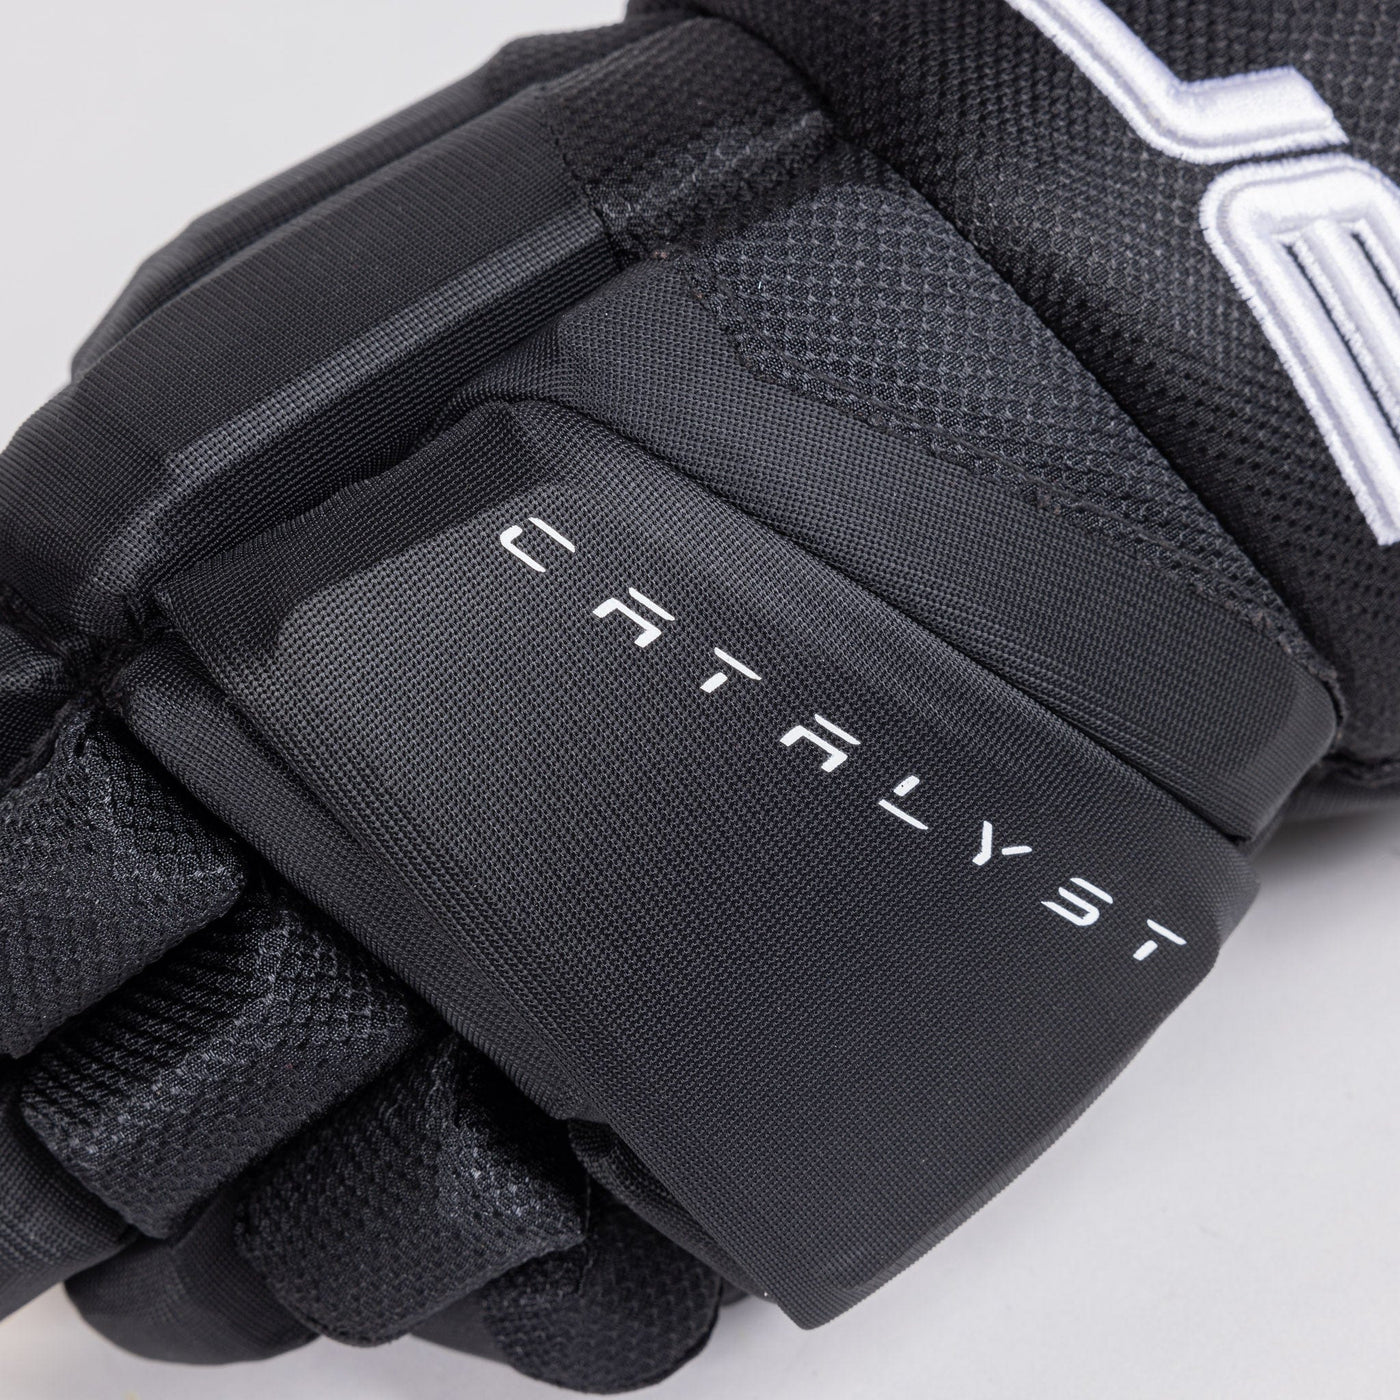 TRUE Catalyst Pro Stock Senior Hockey Glove - Philly - The Hockey Shop Source For Sports